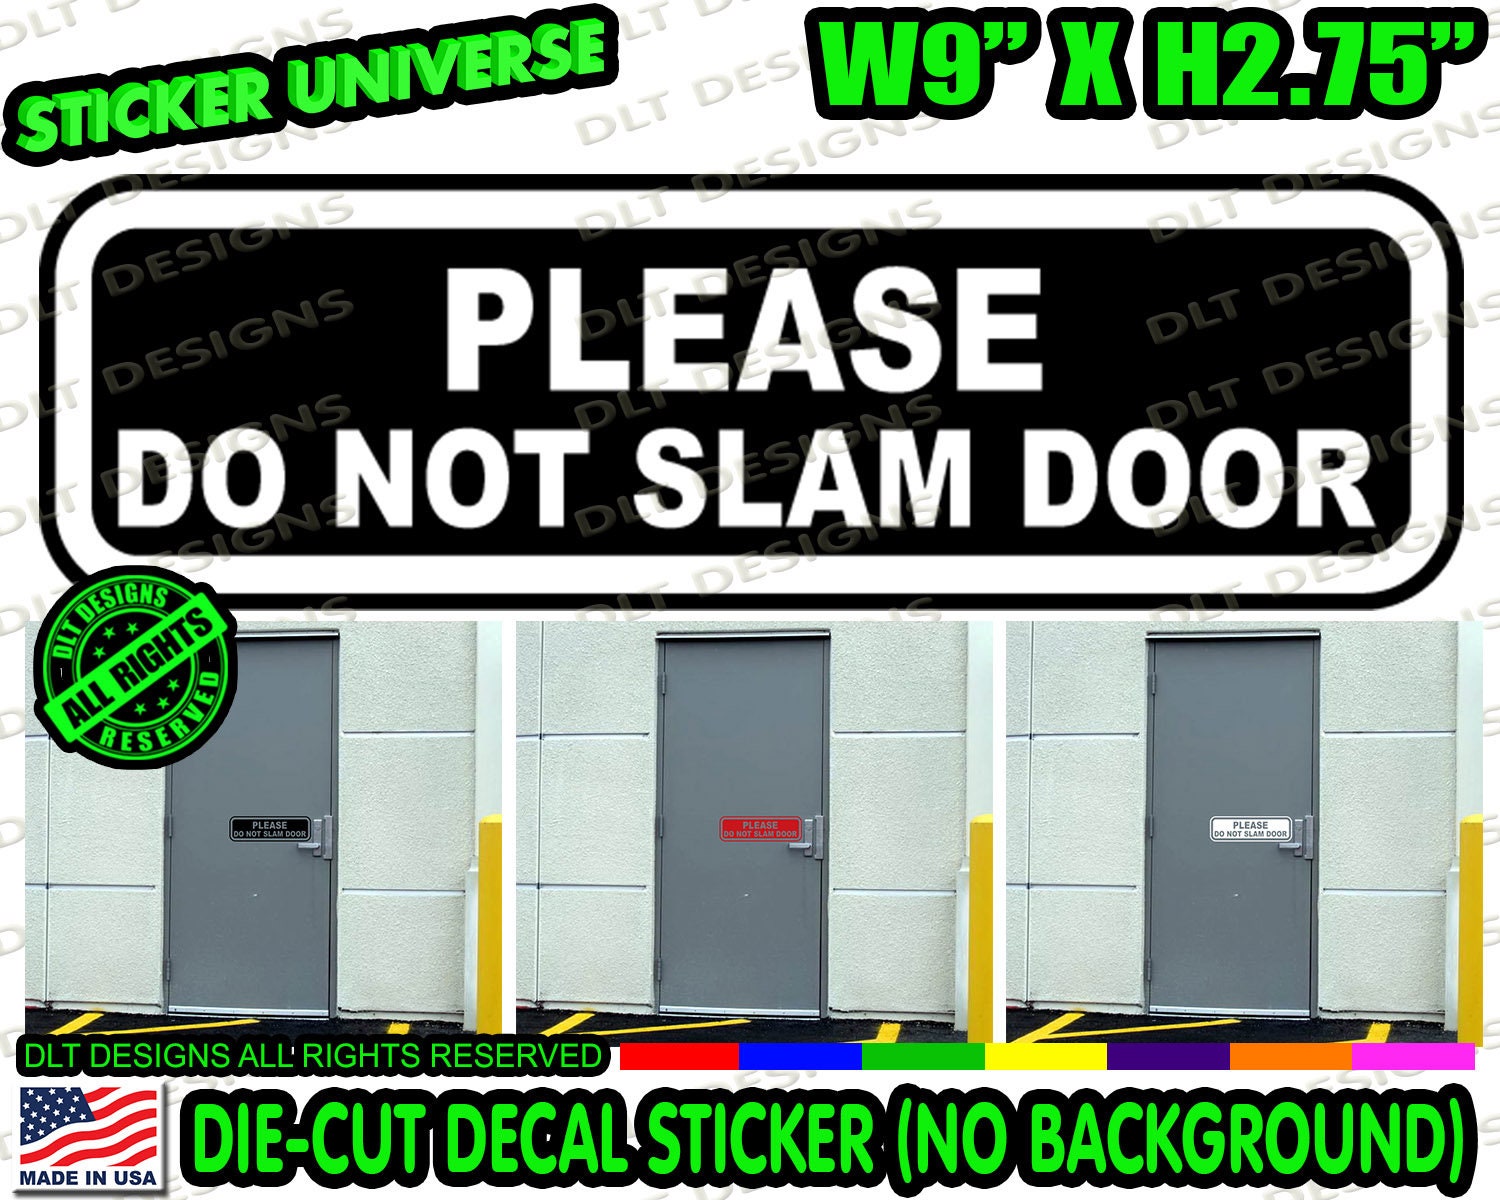 Please Do Not Slam the Door SIGN (7X10, White, Aluminum)